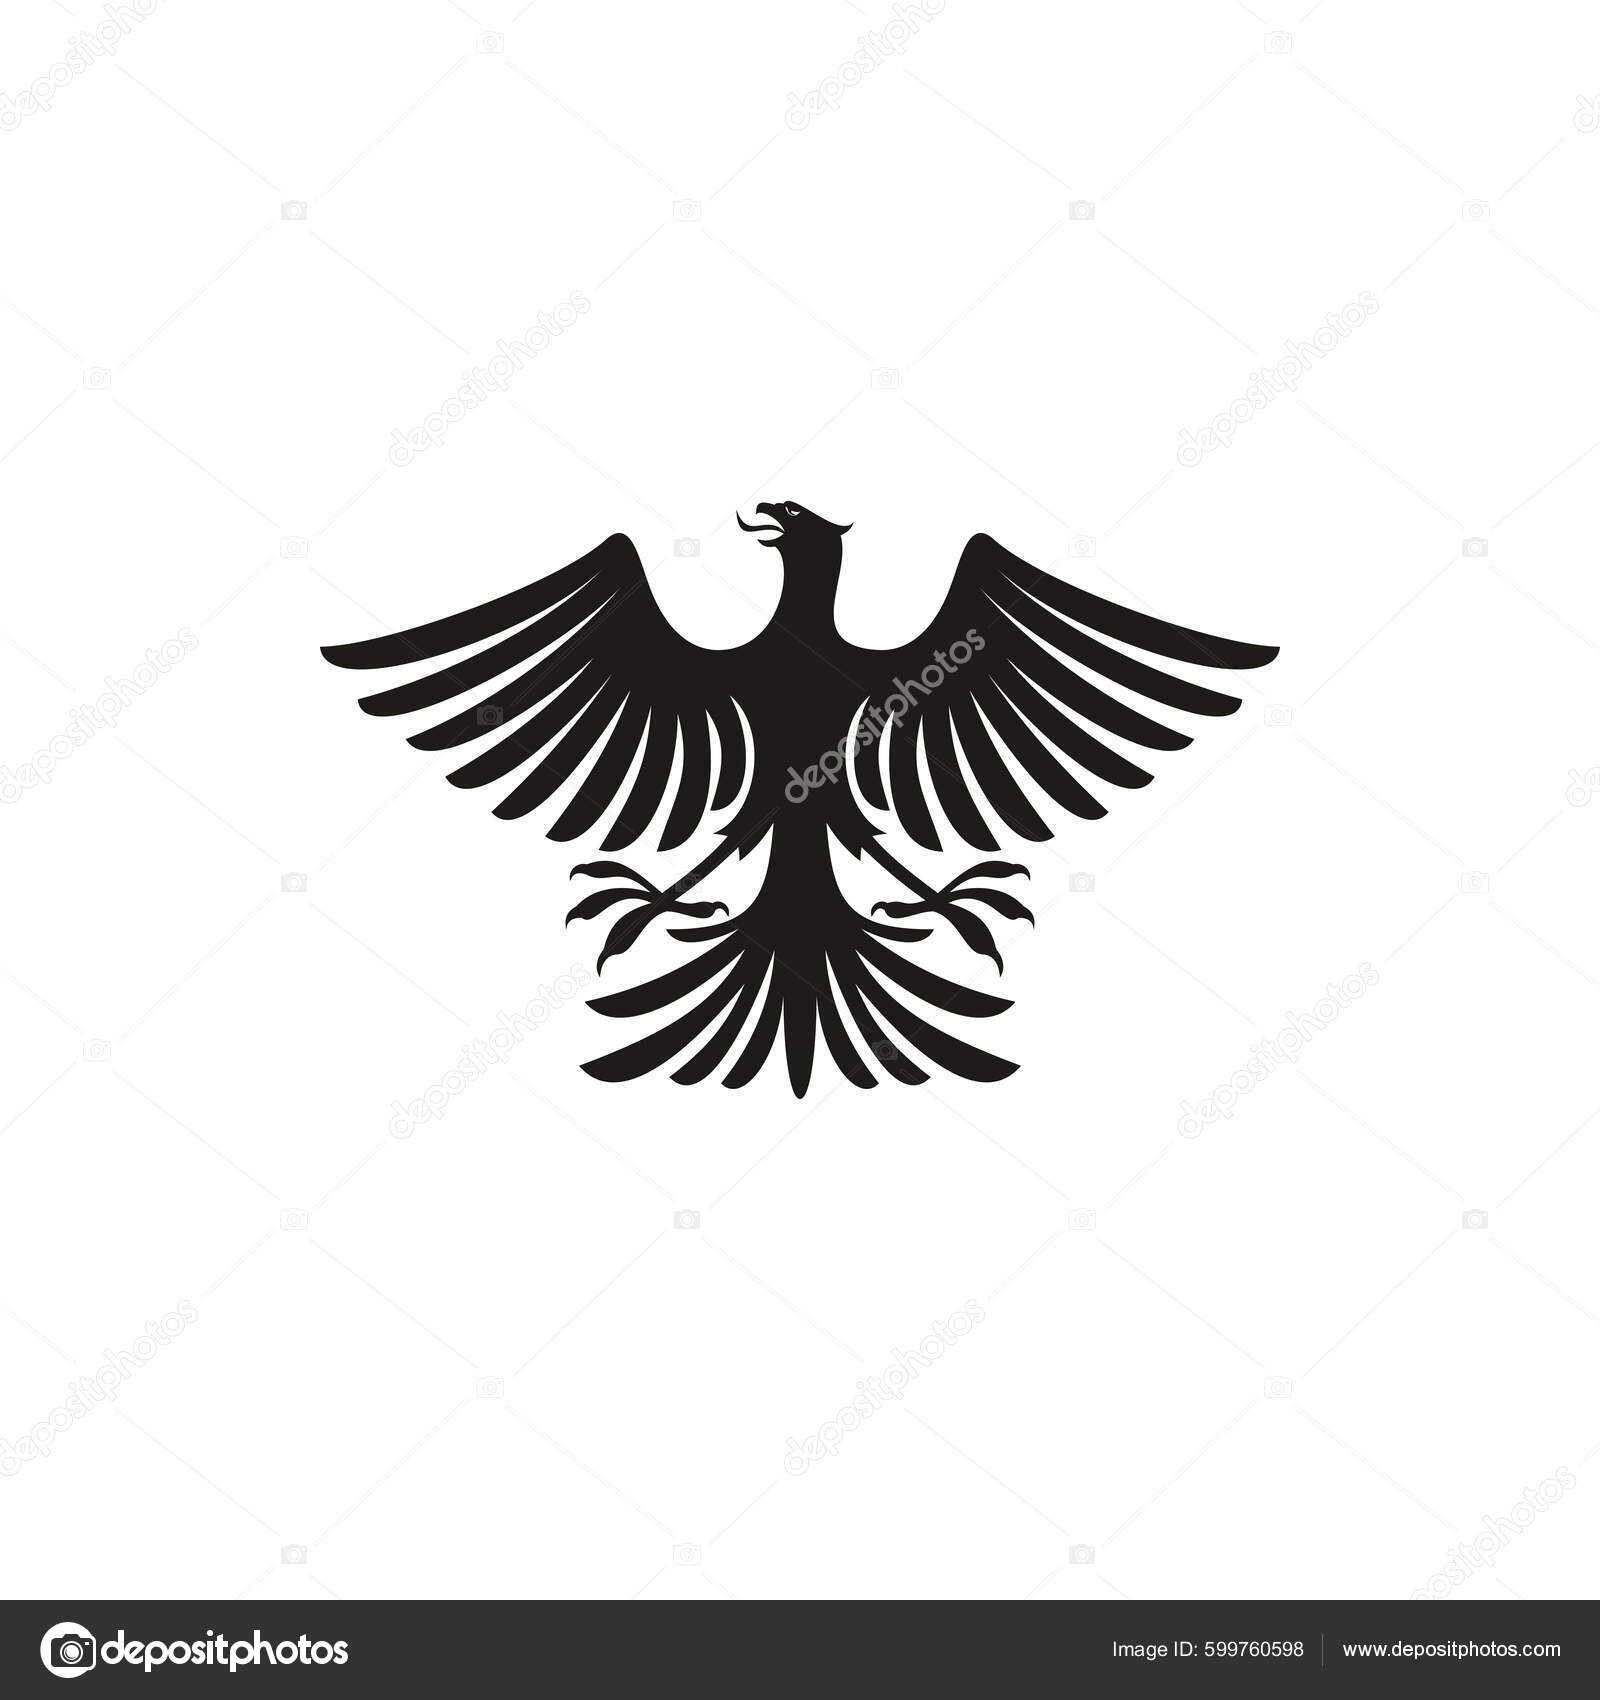 https://st.depositphotos.com/1020070/59976/v/1600/depositphotos_599760598-stock-illustration-black-eagle-heraldry-symbol-isolated.jpg